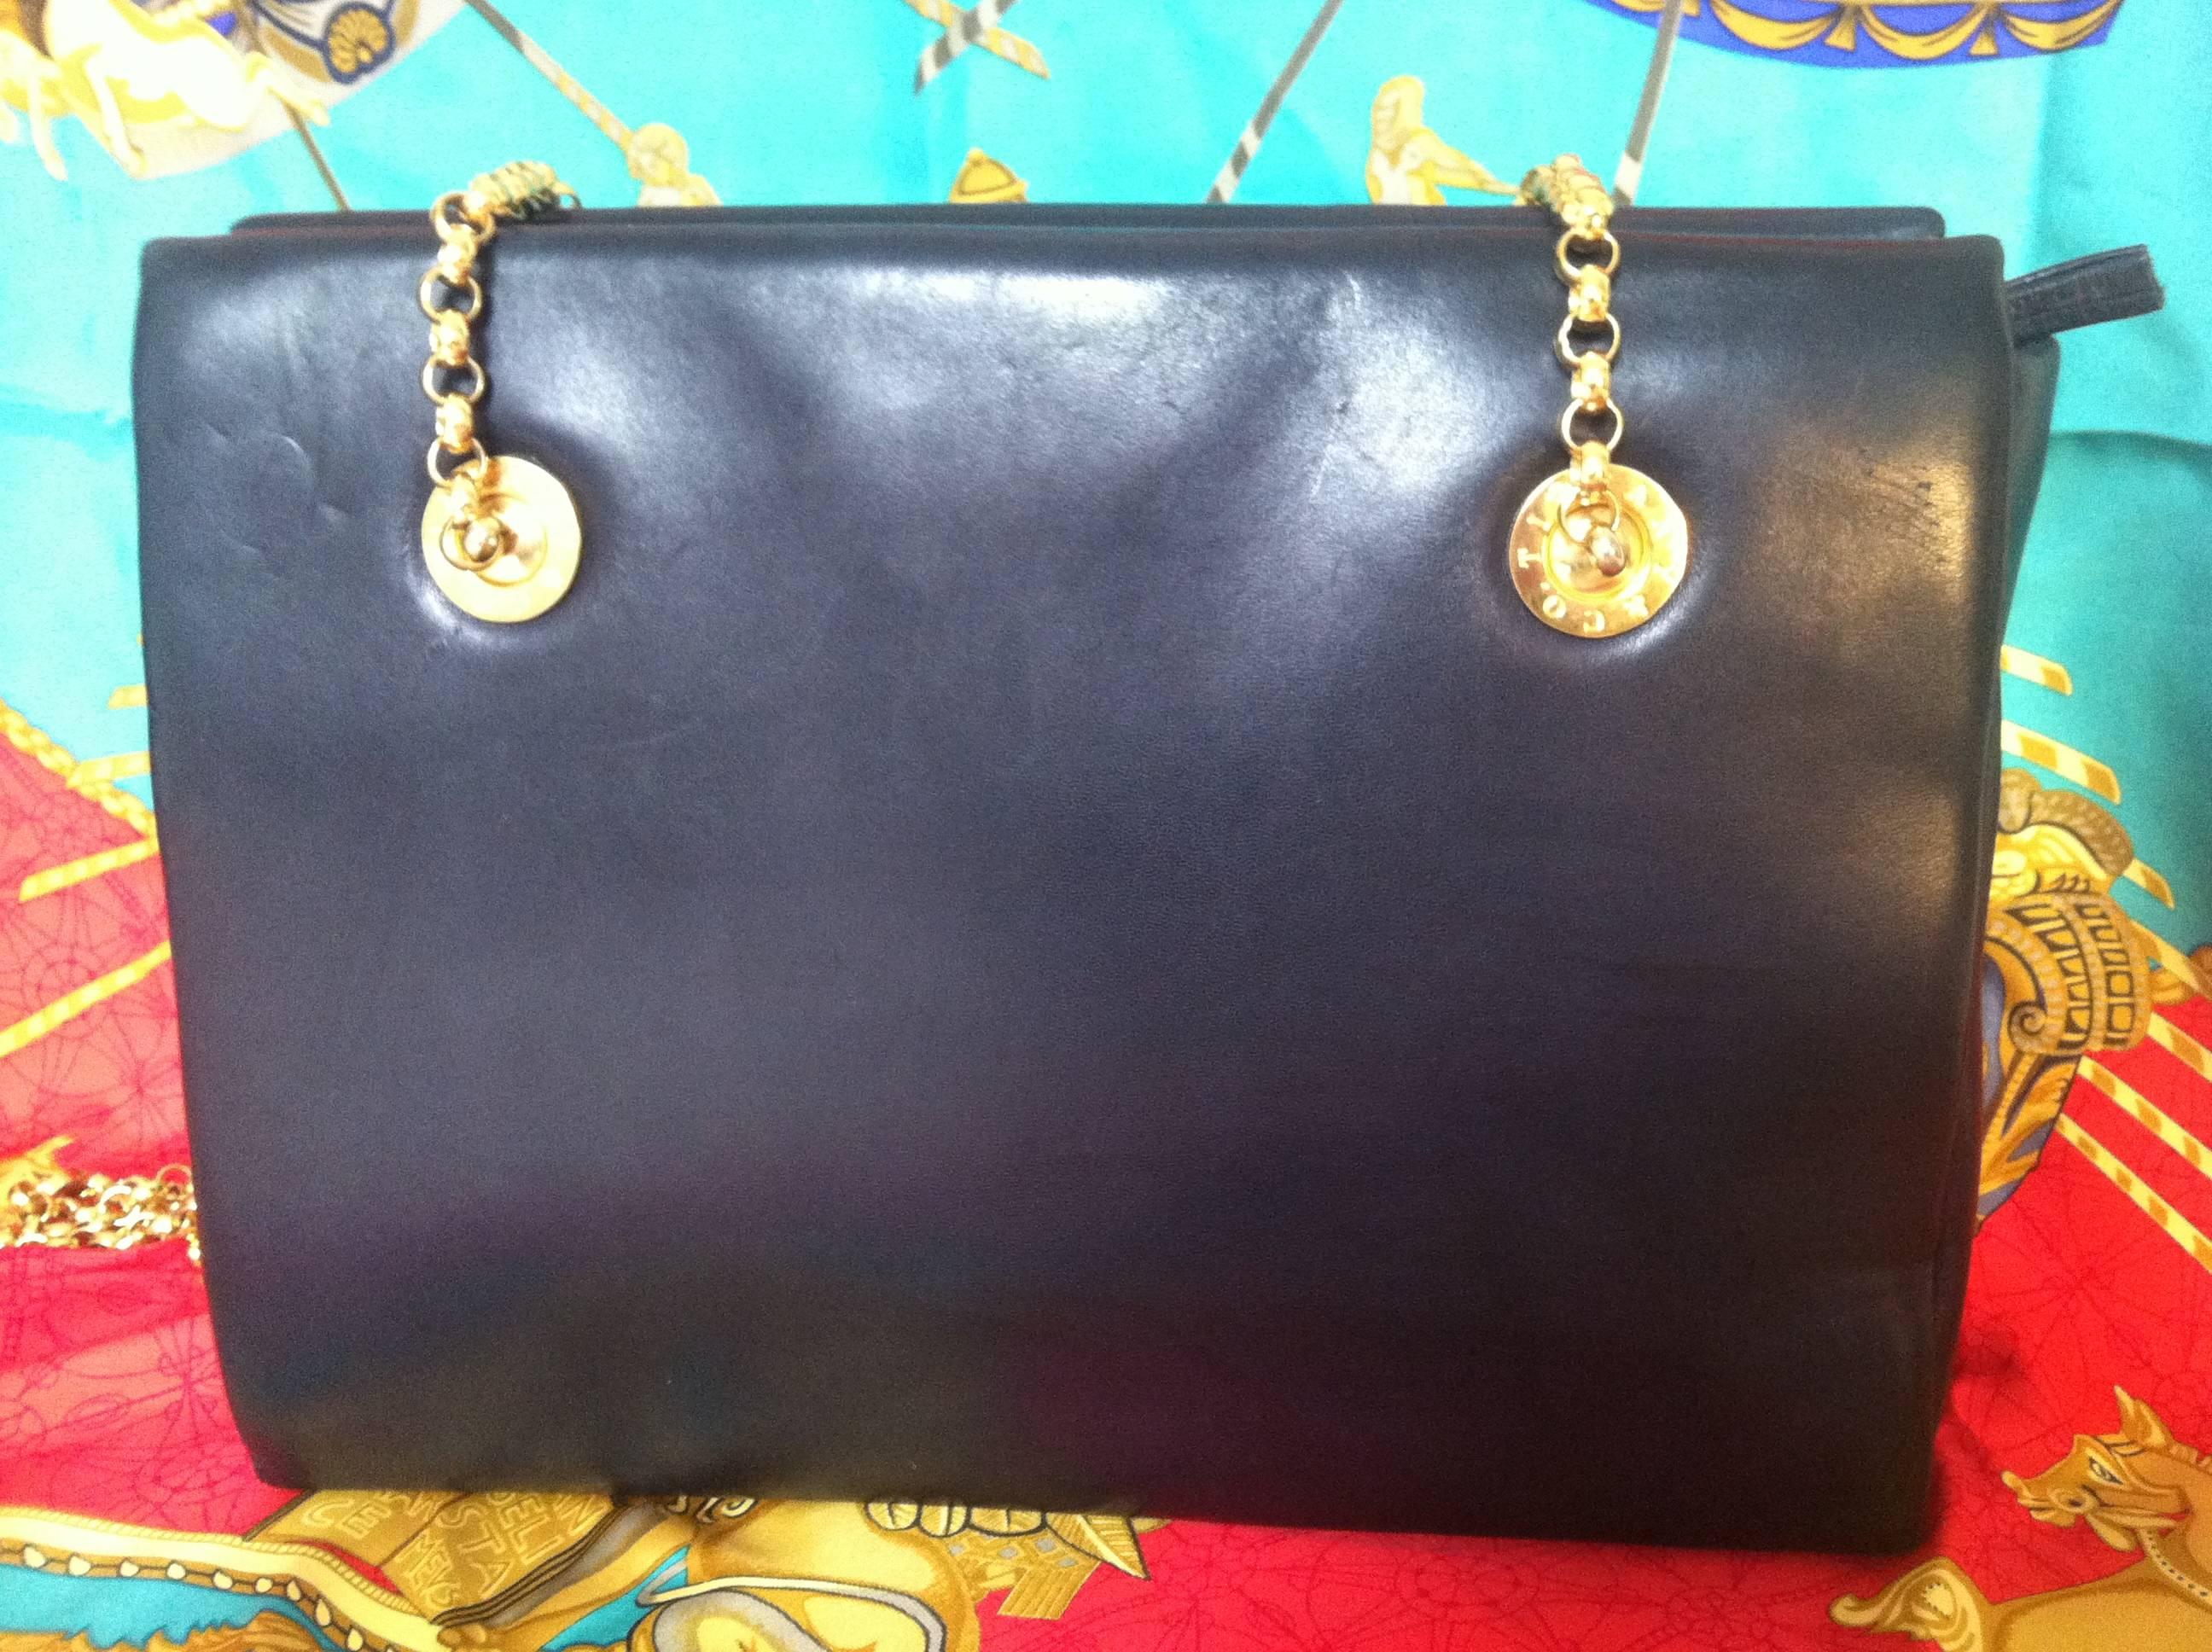 Vintage Tiffany black leather shoulder bag, tote with golden chain straps  1